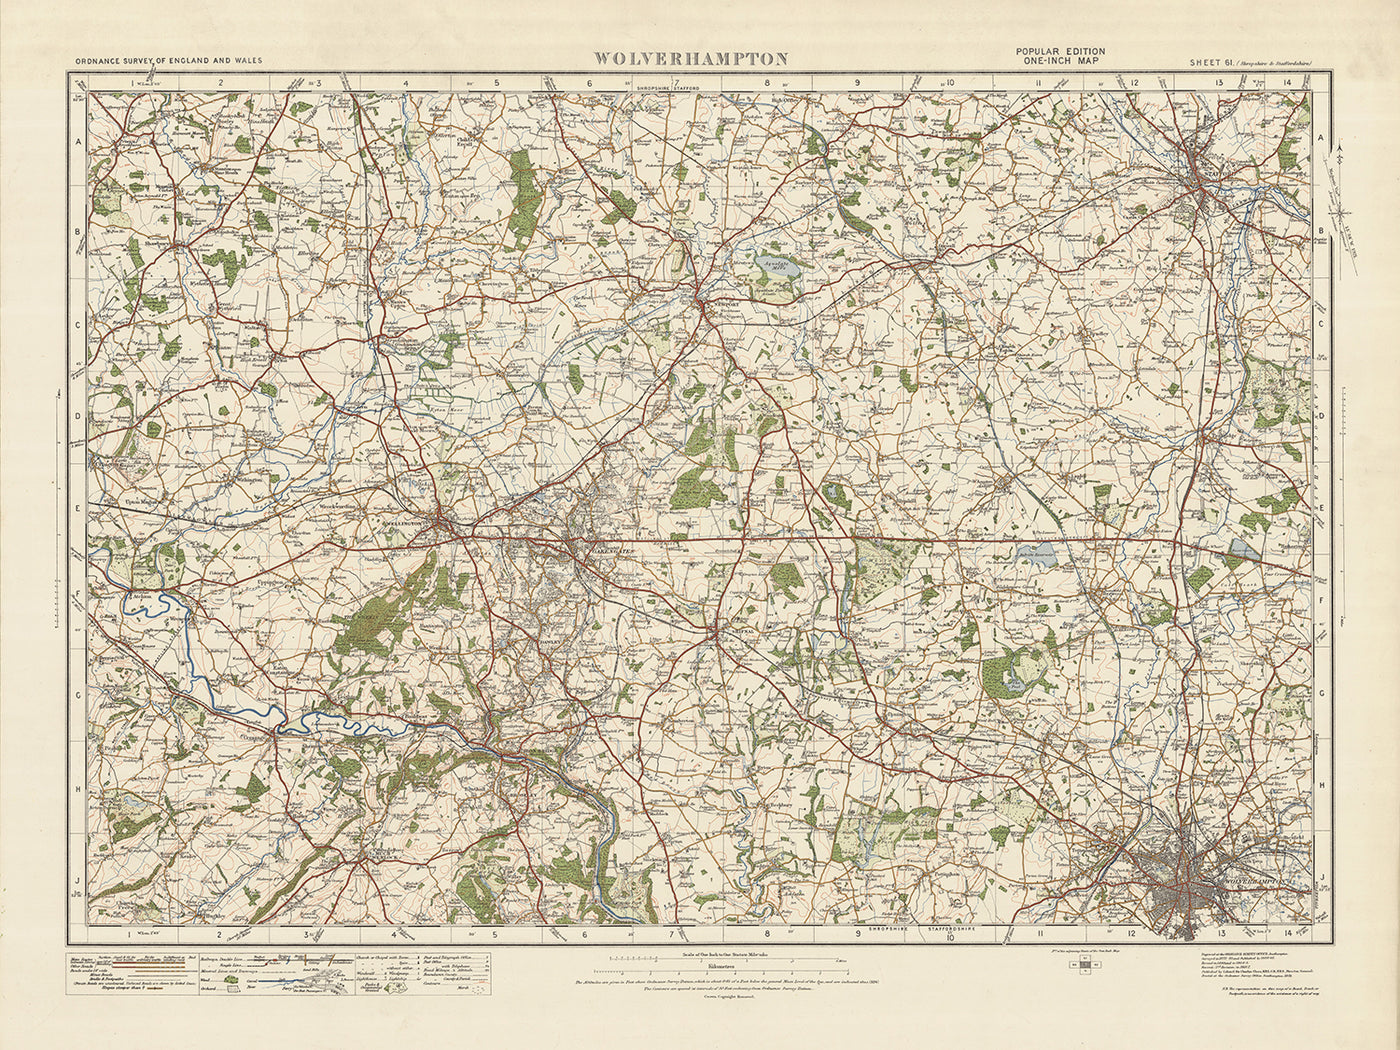 Old Ordnance Survey Map, Sheet 61 - Wolverhampton, 1925: Shifnal, Telford, Newport, Stafford, The Iron Bridge